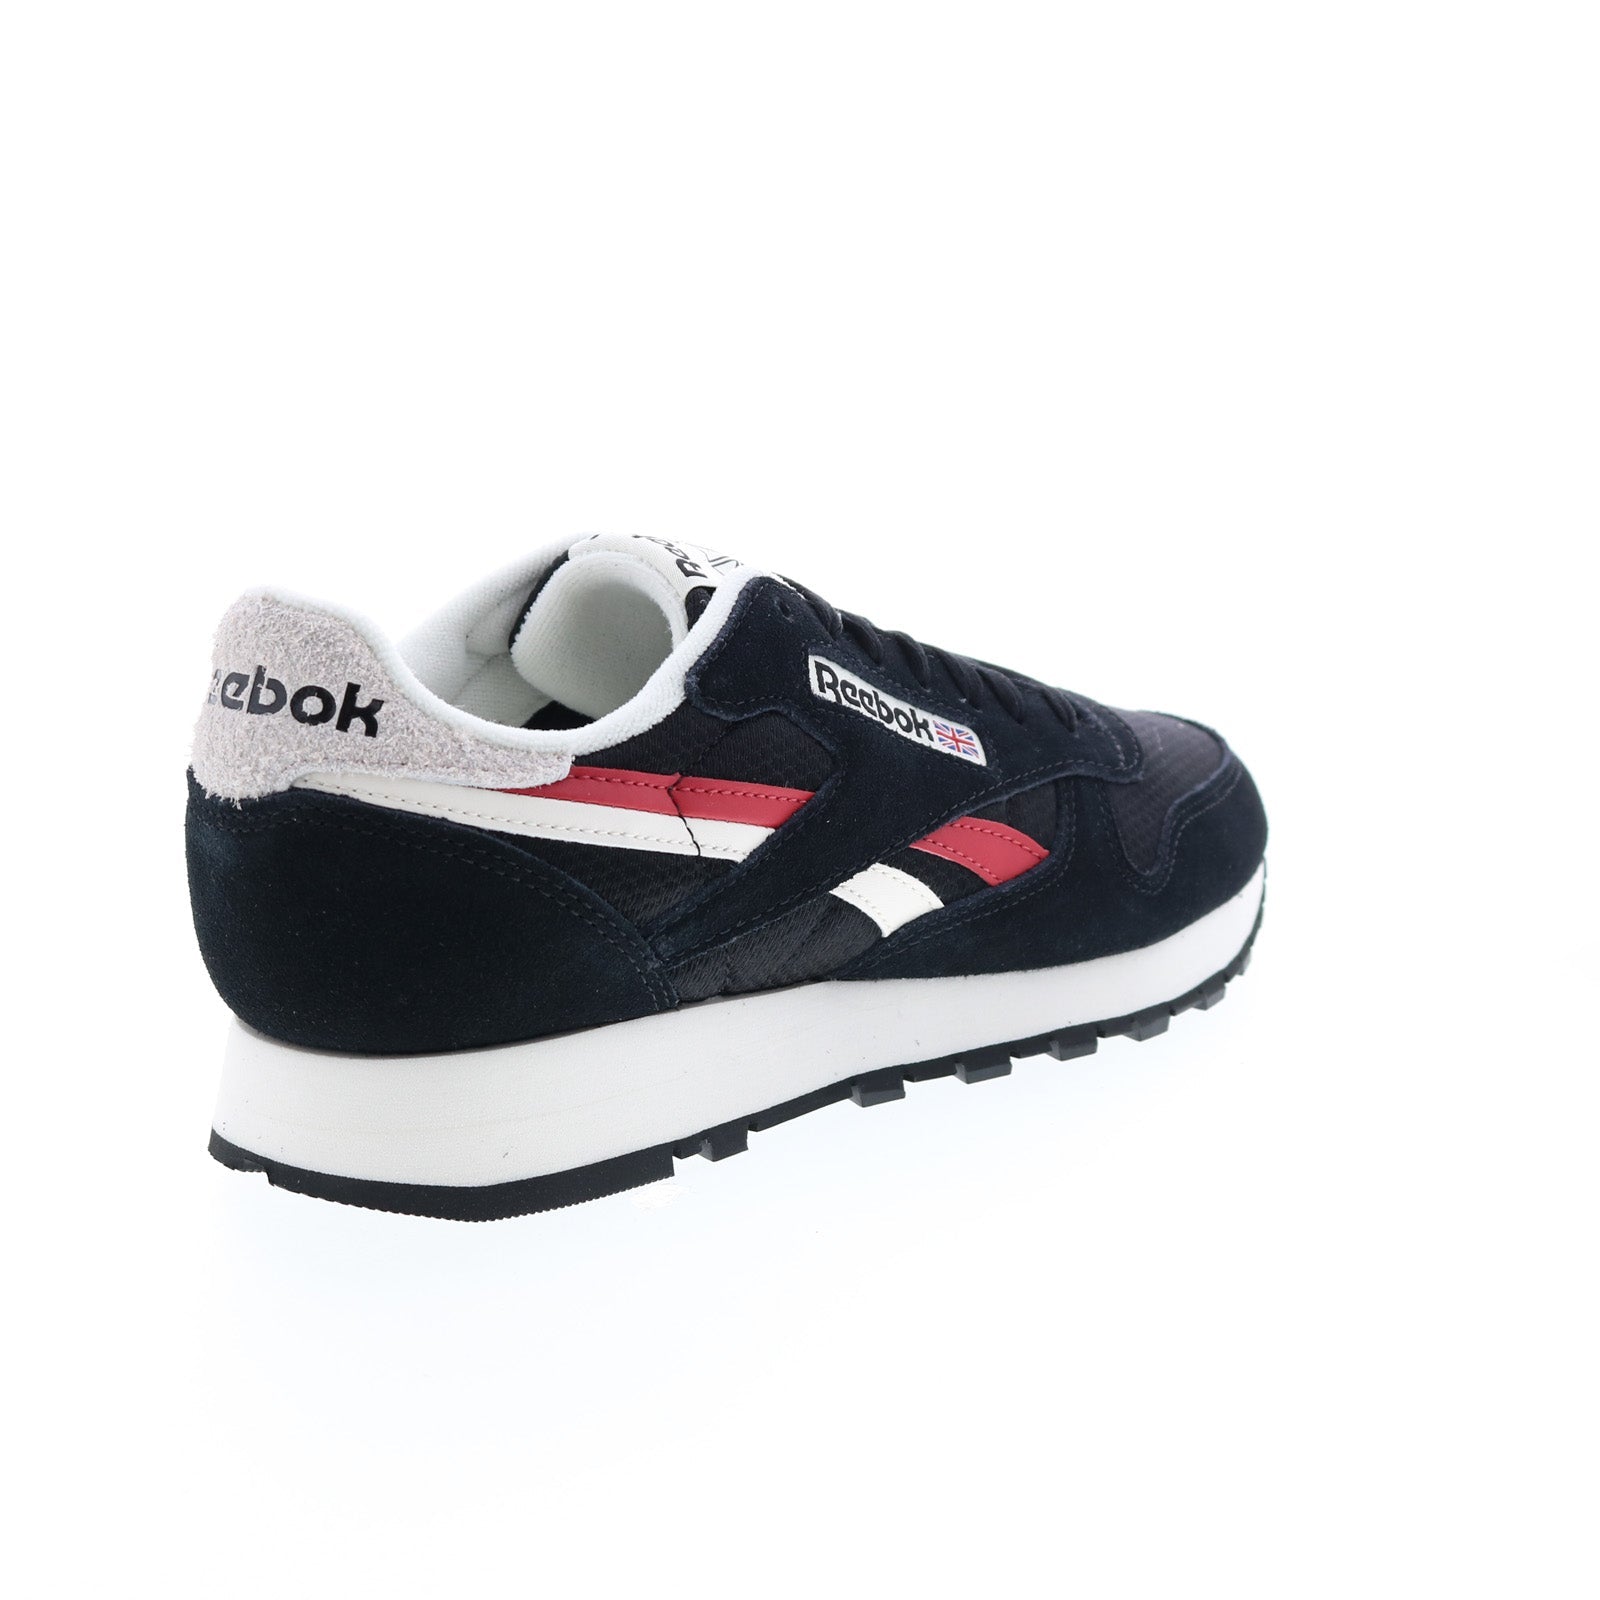 Inconsciente Subtropical Caso Reebok Classic Leather GY7303 Mens Black Suede Lifestyle Sneakers Shoe -  Ruze Shoes